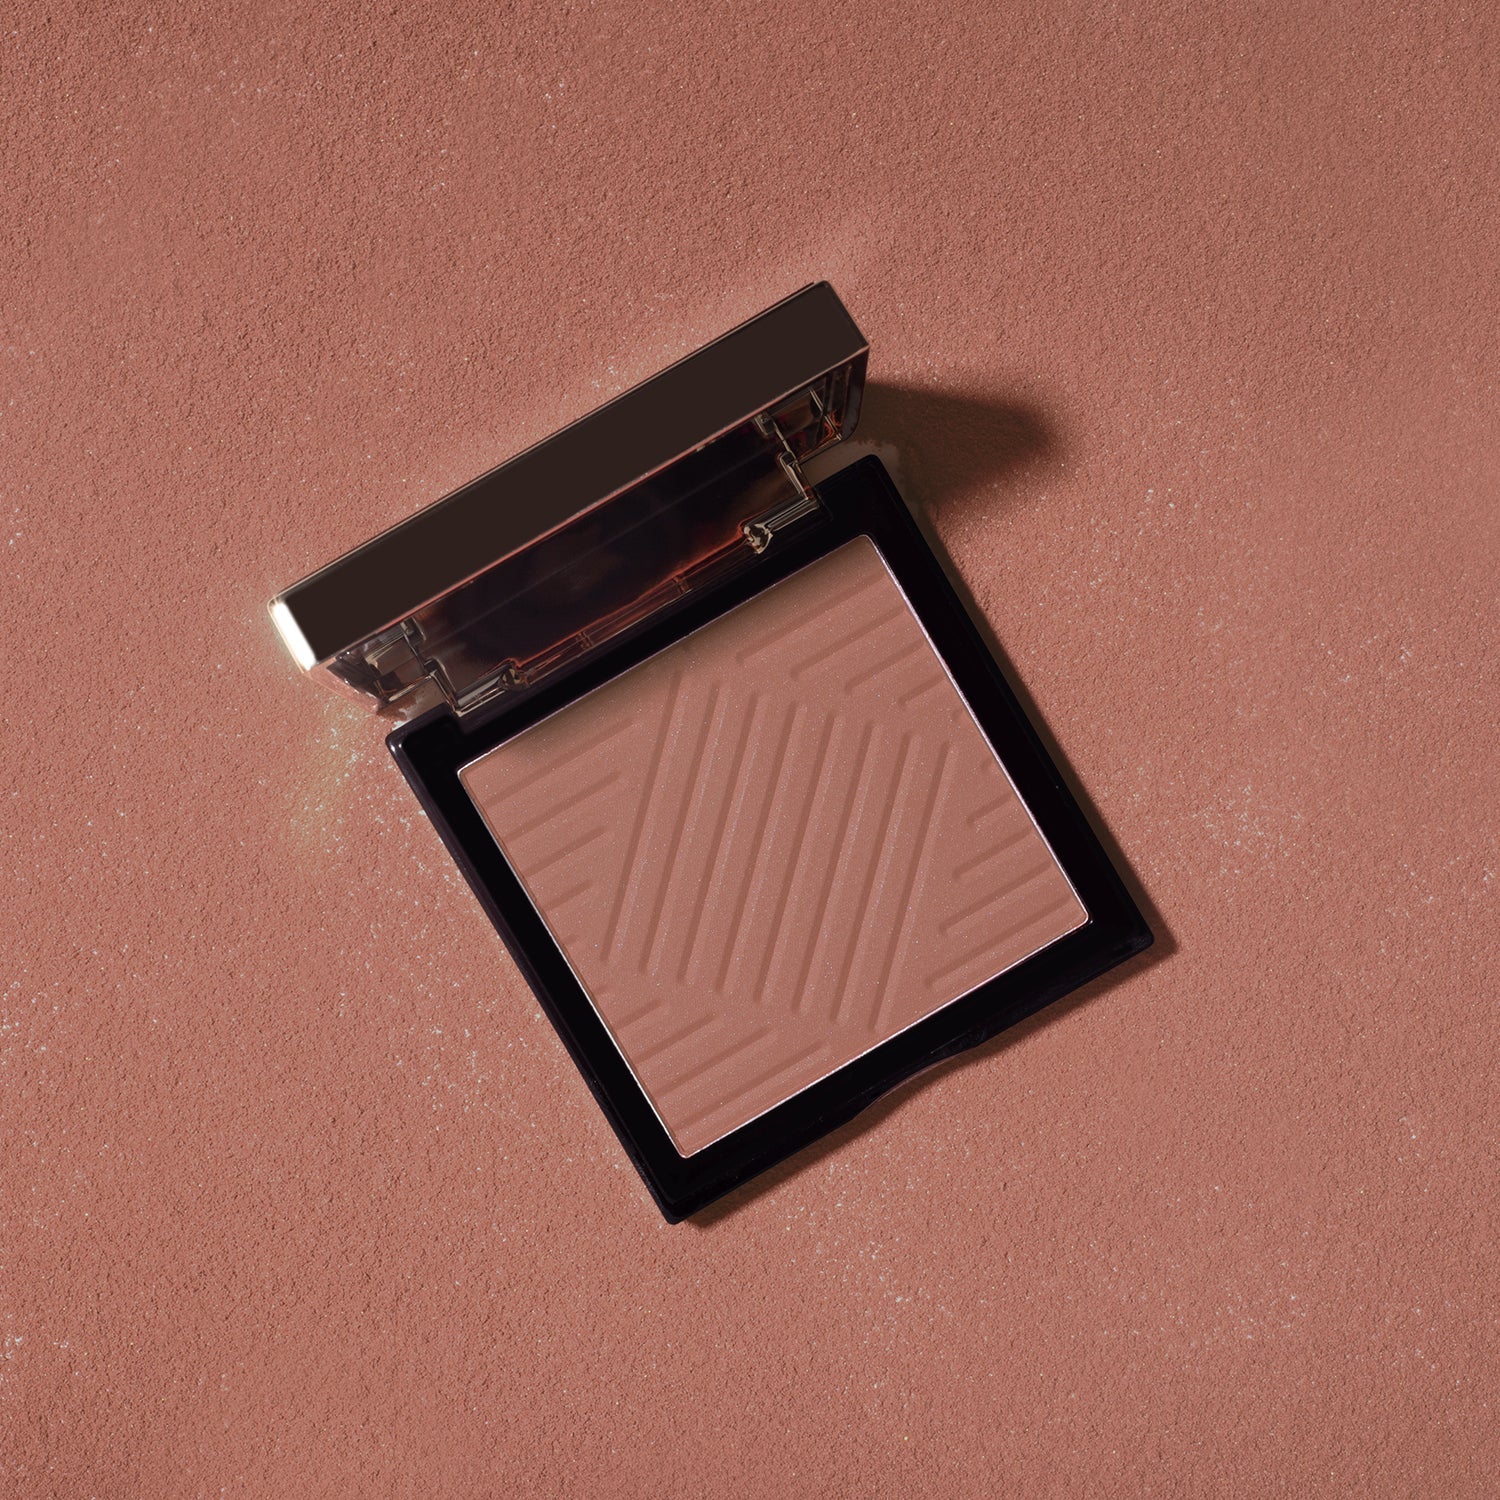 PAC Cosmetics Spotlight Blush (10.6 gm) #Color_Retake